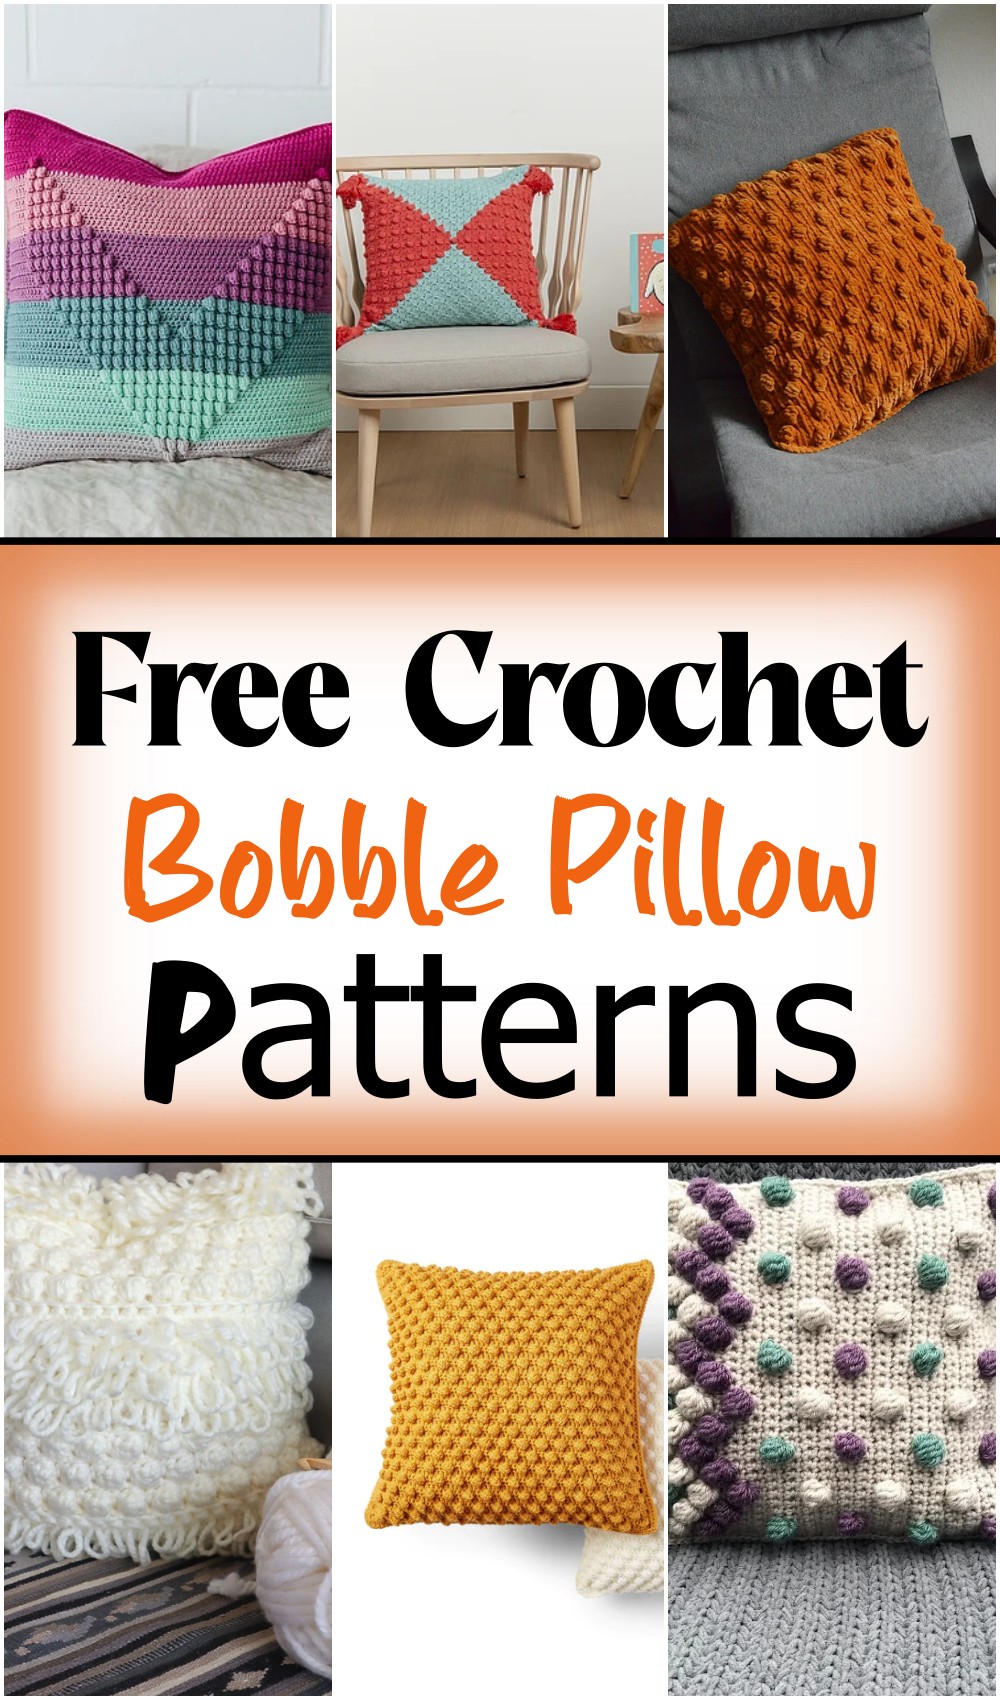 18 Free Crochet Bobble Pillow Patterns